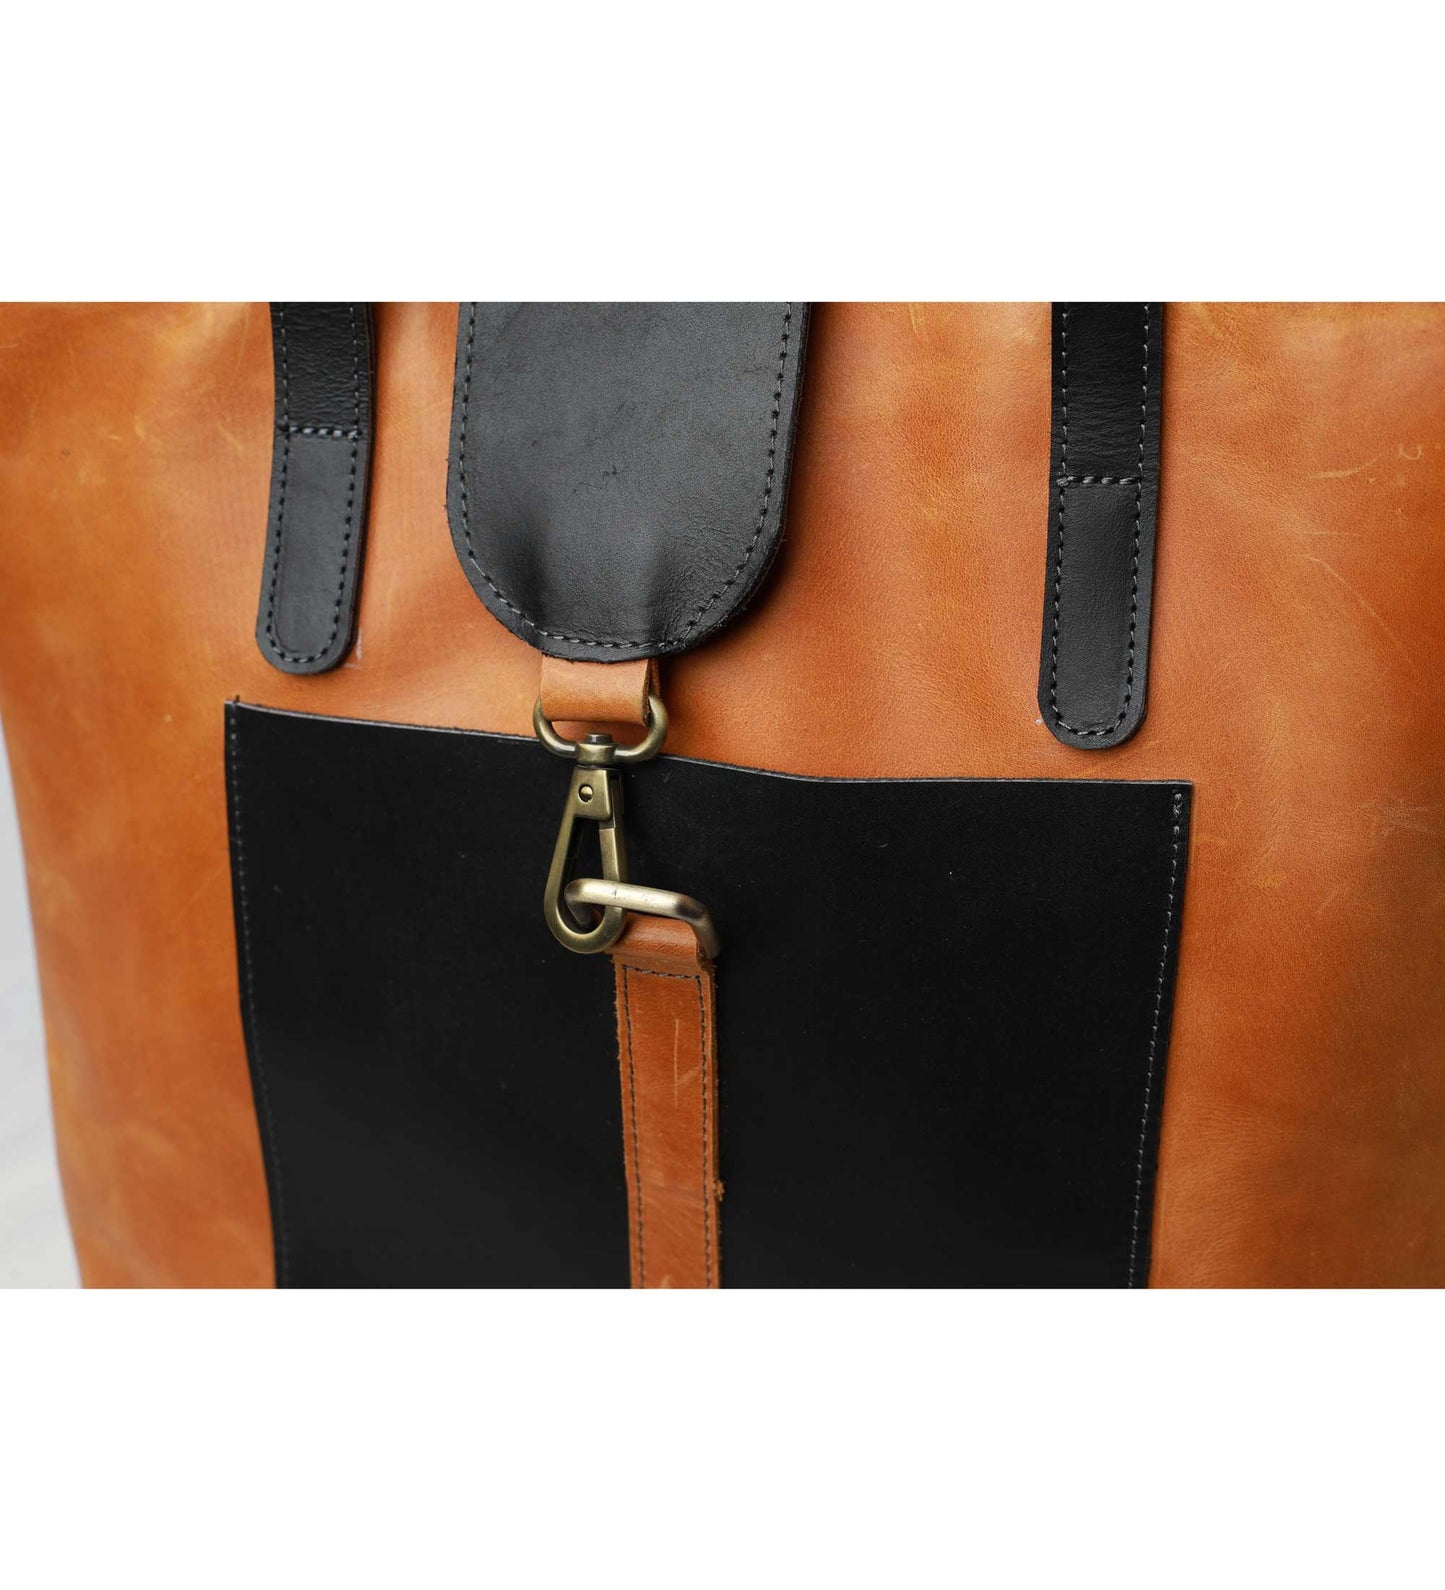 Ethiopian light brown and black handmade genuine leather bag